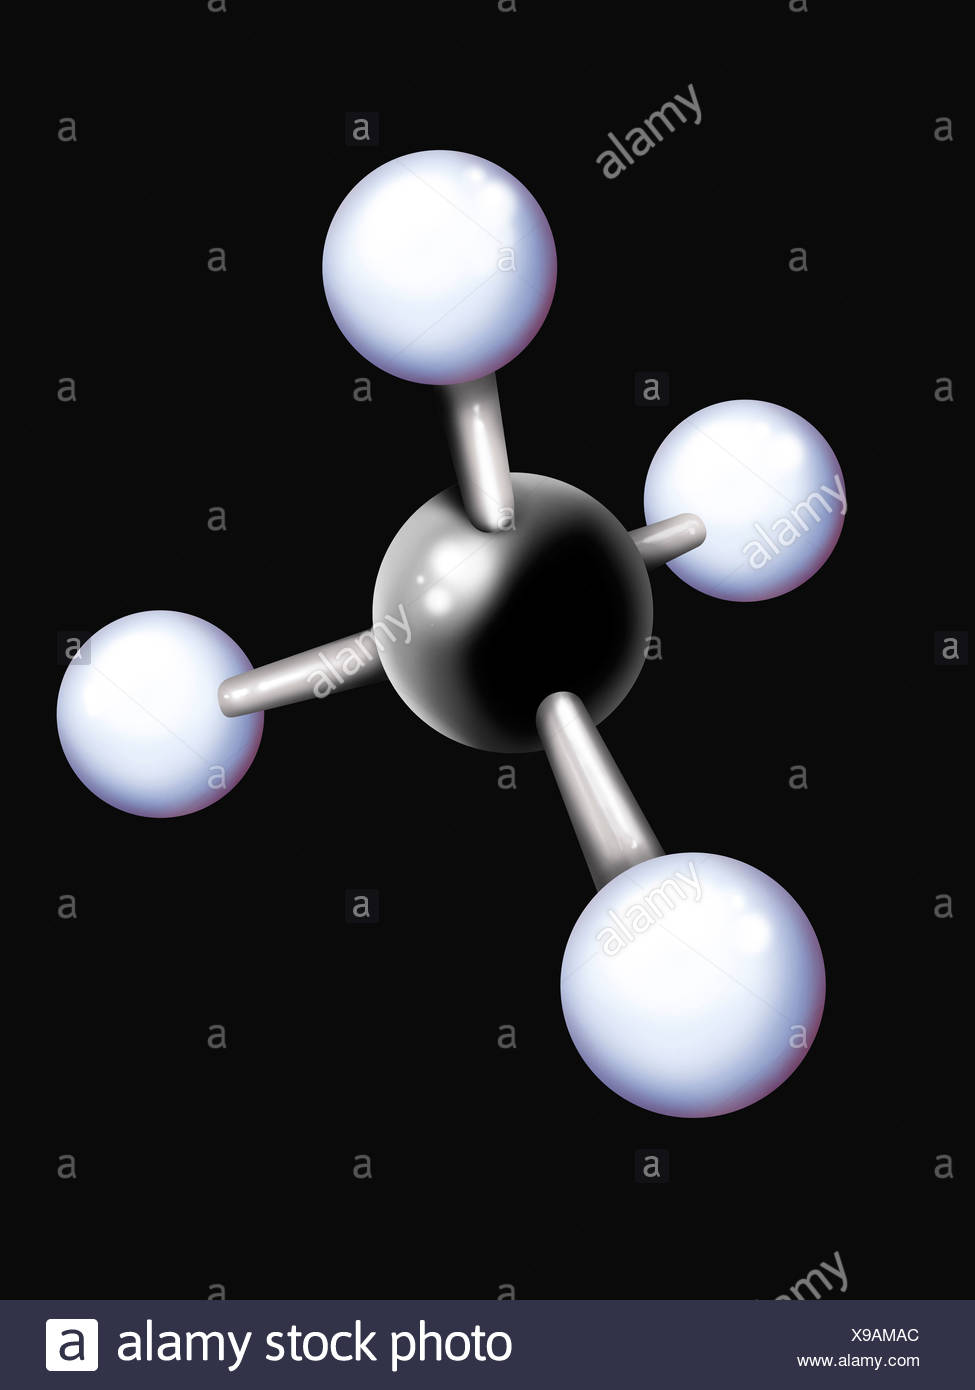 Image result for images of carbon molecule